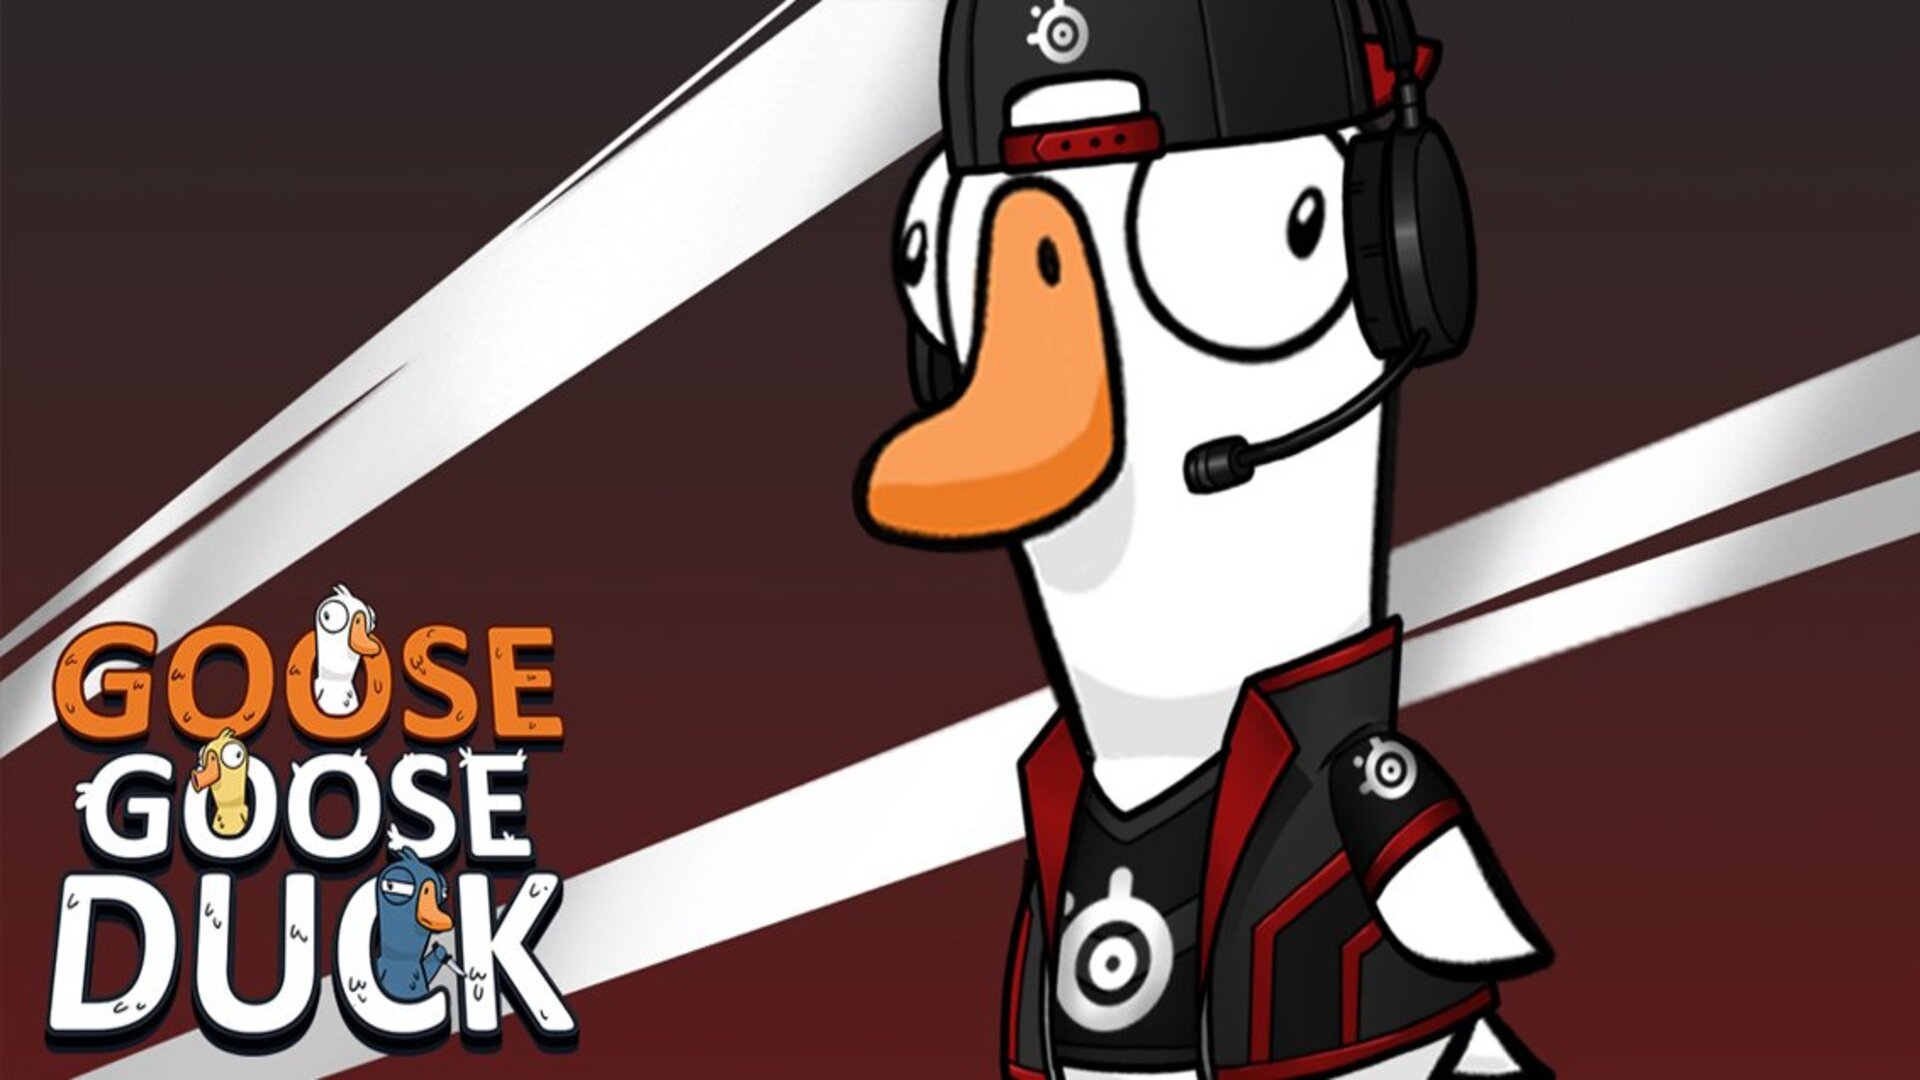 (3.79$) Goose Goose Duck - Steelseries Outfit Pack Digital Download CD Key